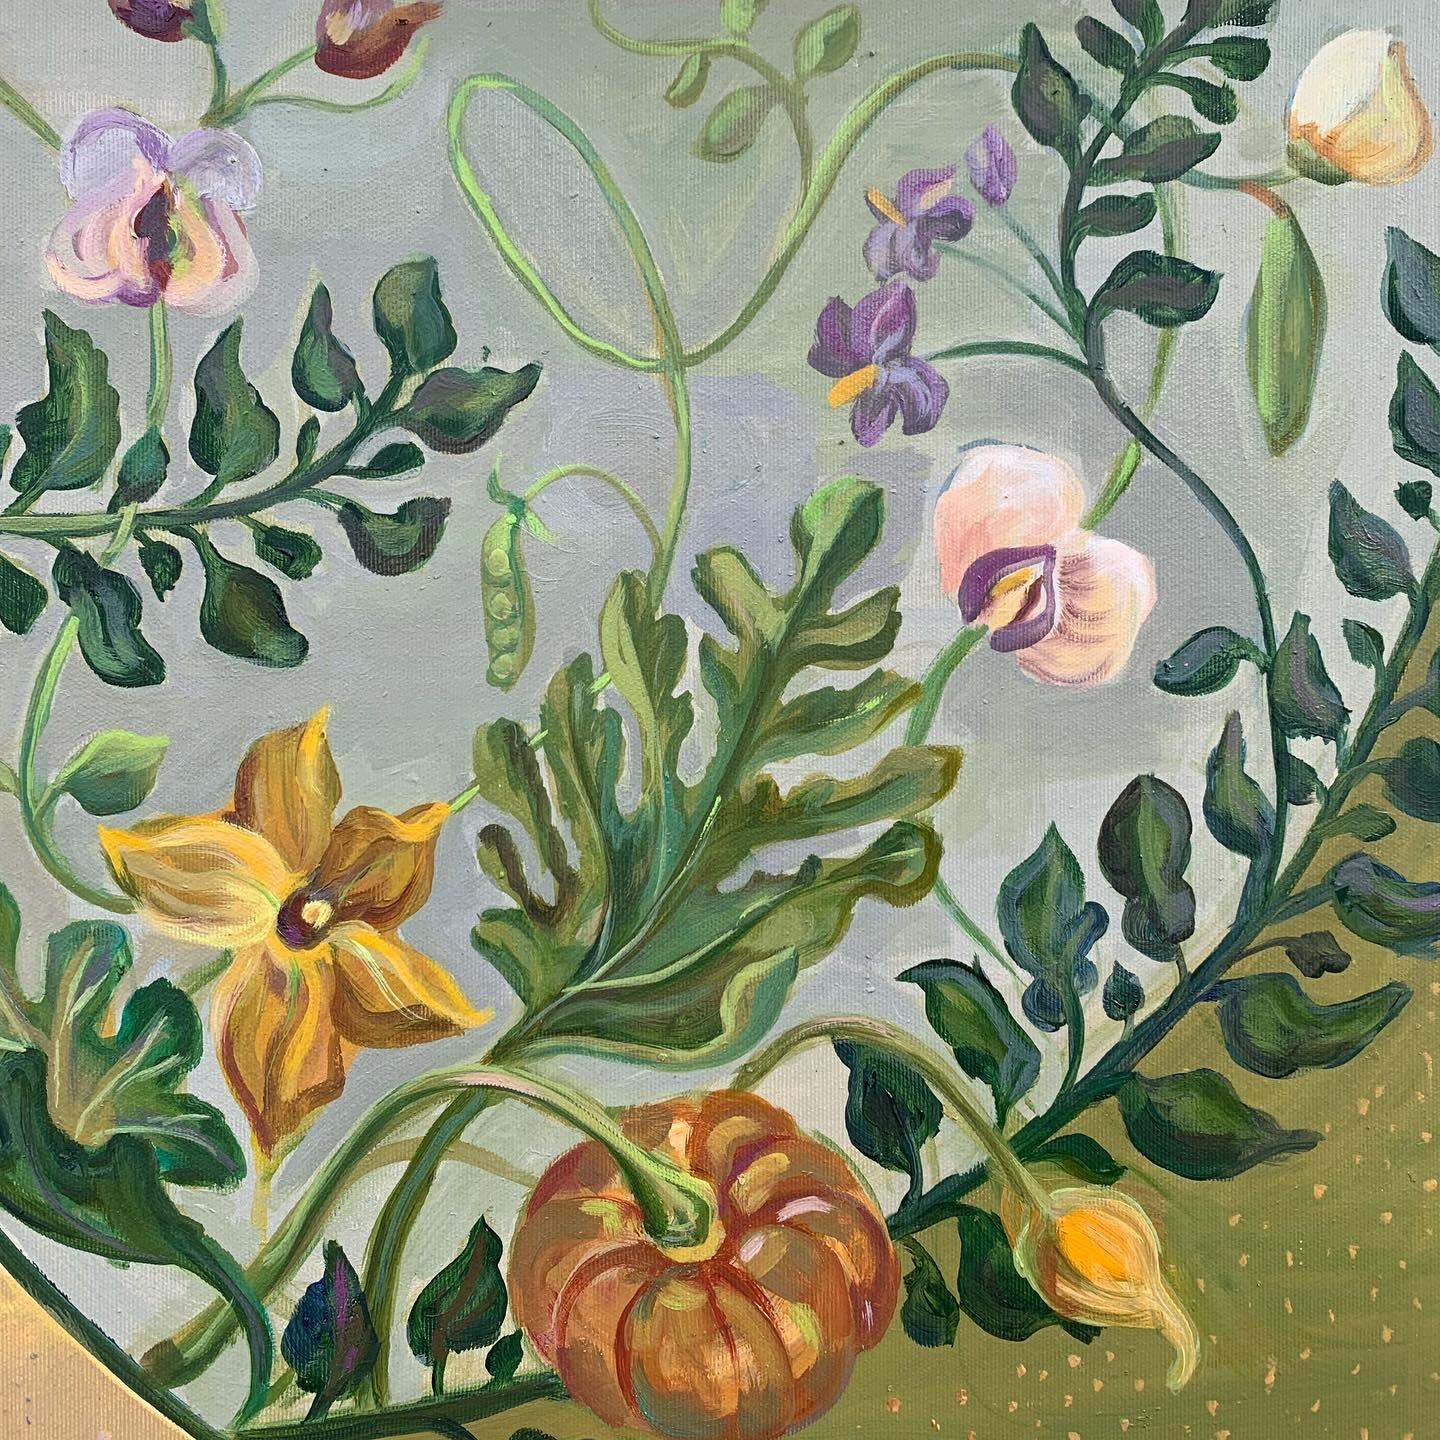 Peaceful Kingdom of Plants. Botanical decorative oil painting - Print by Momalyu Liubov